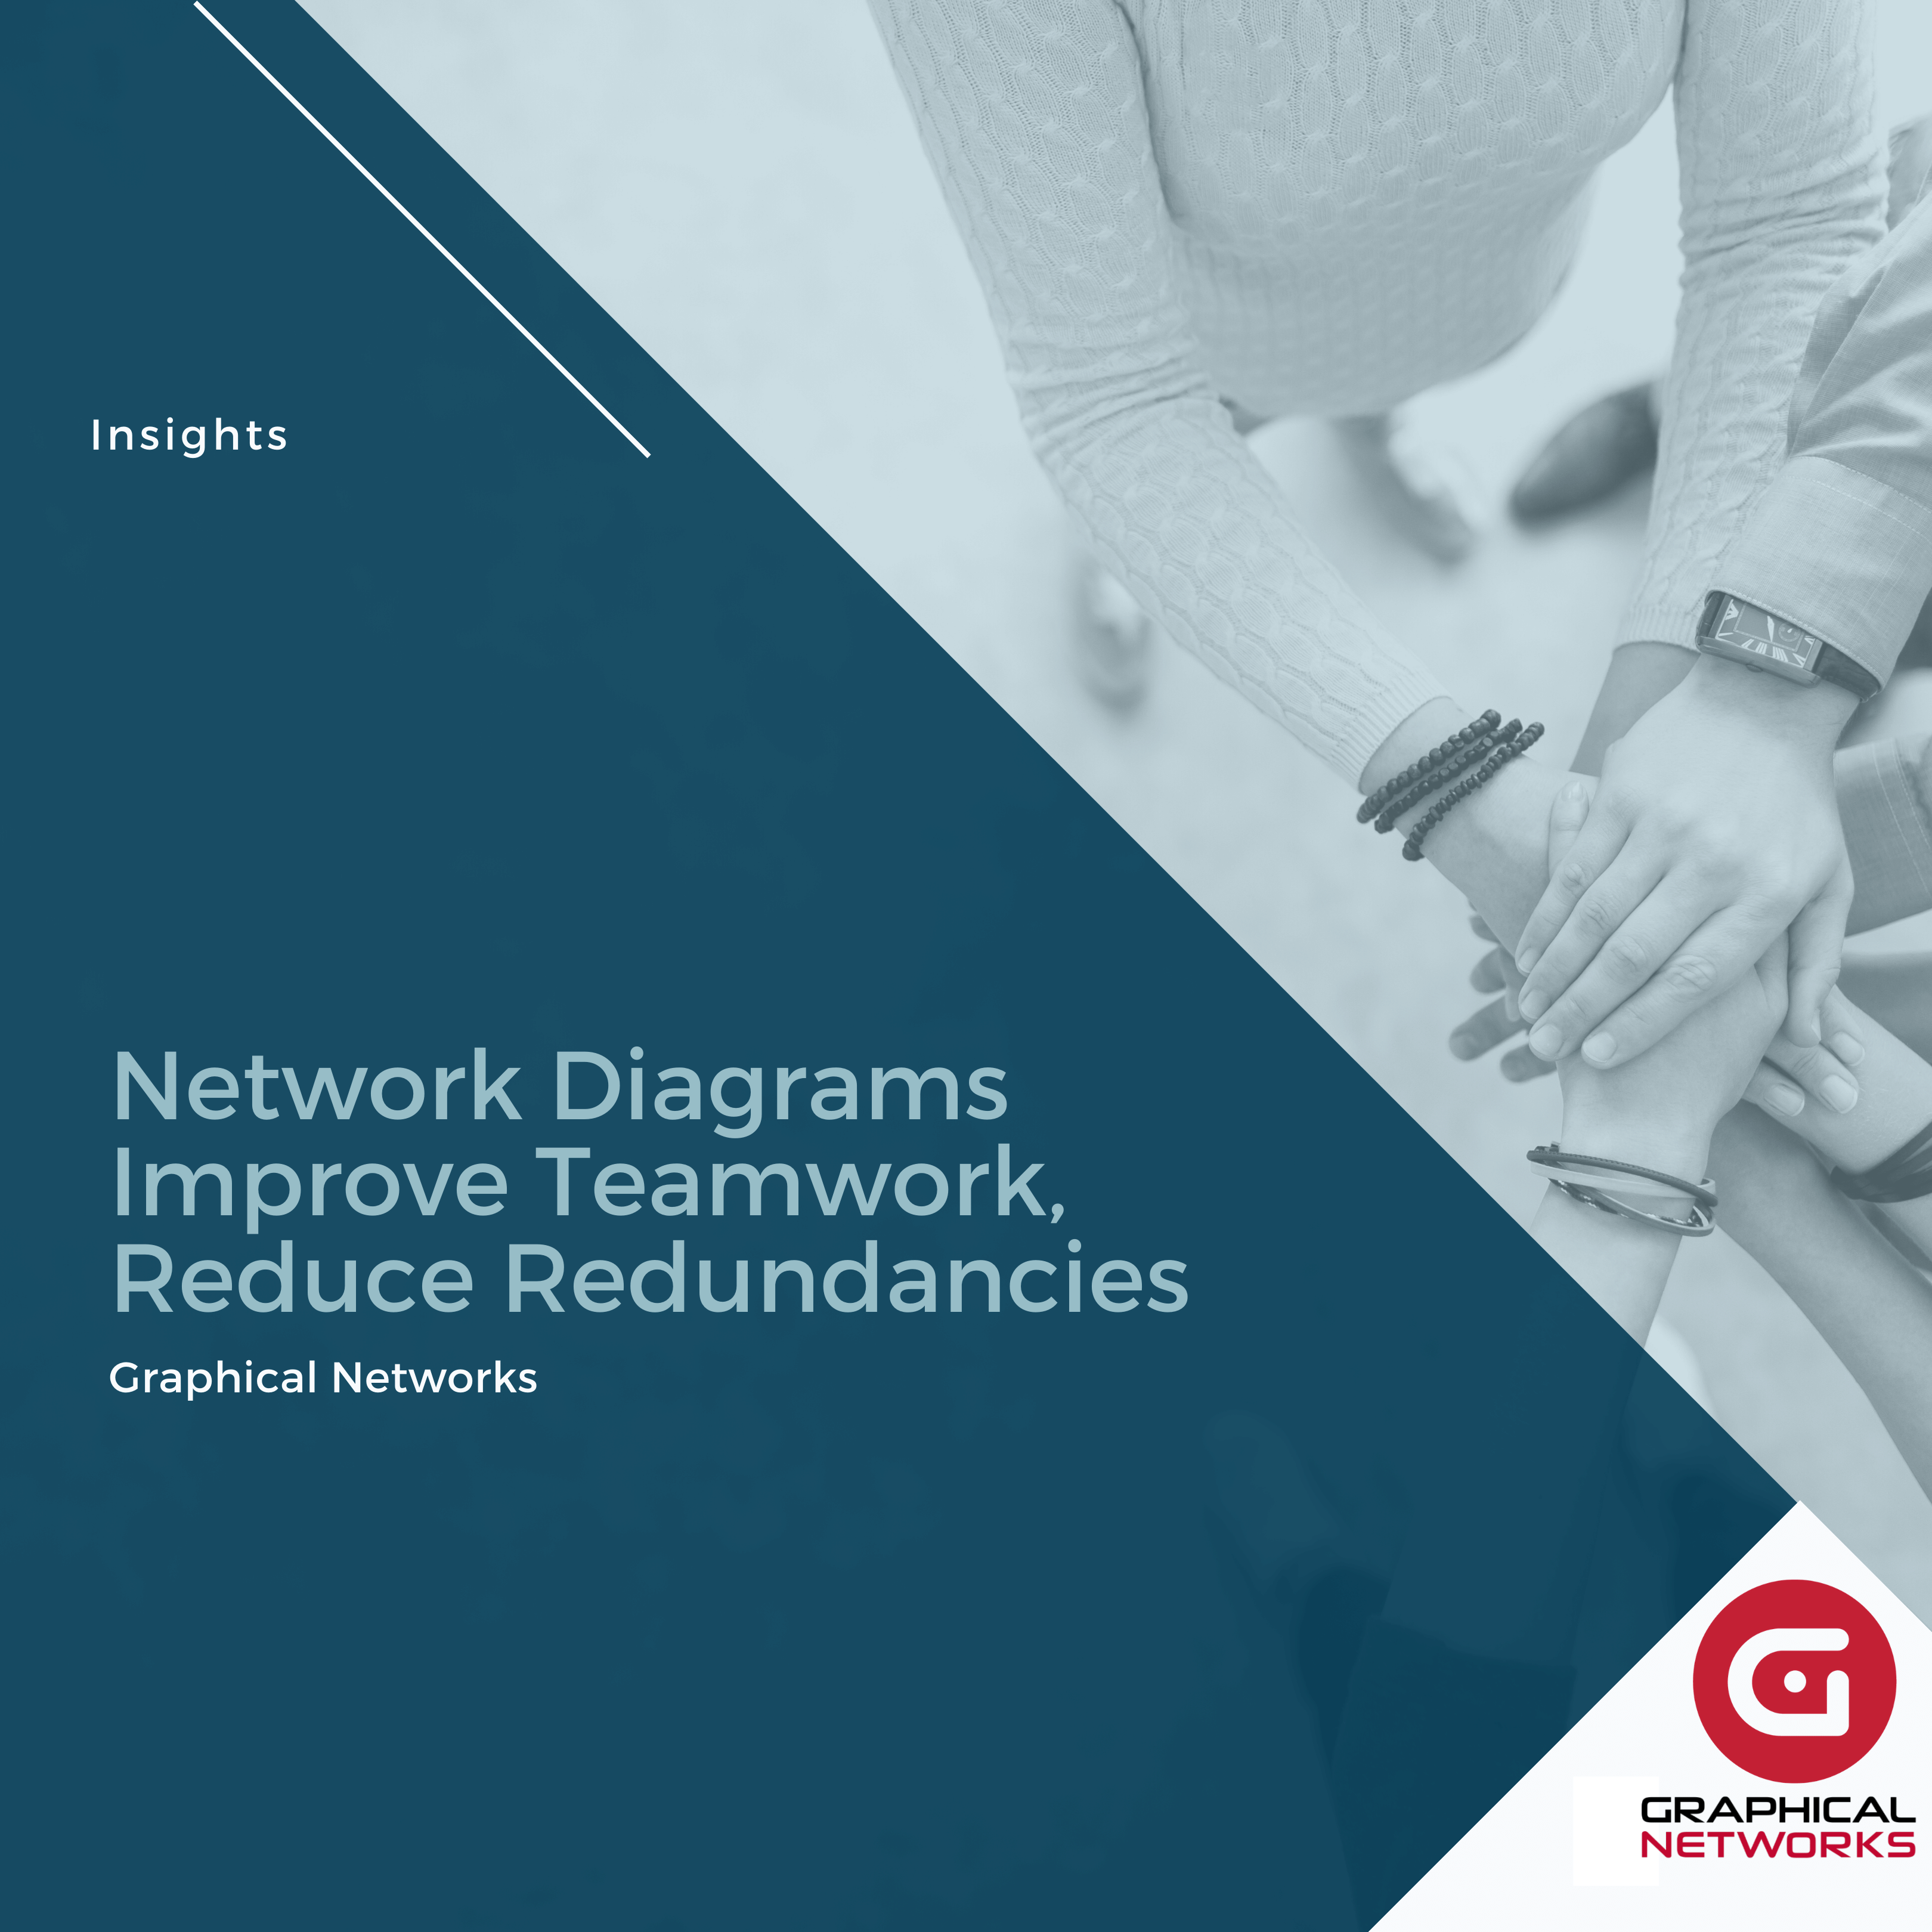 Network Diagrams Improve Teamwork, Reduce Redundancies